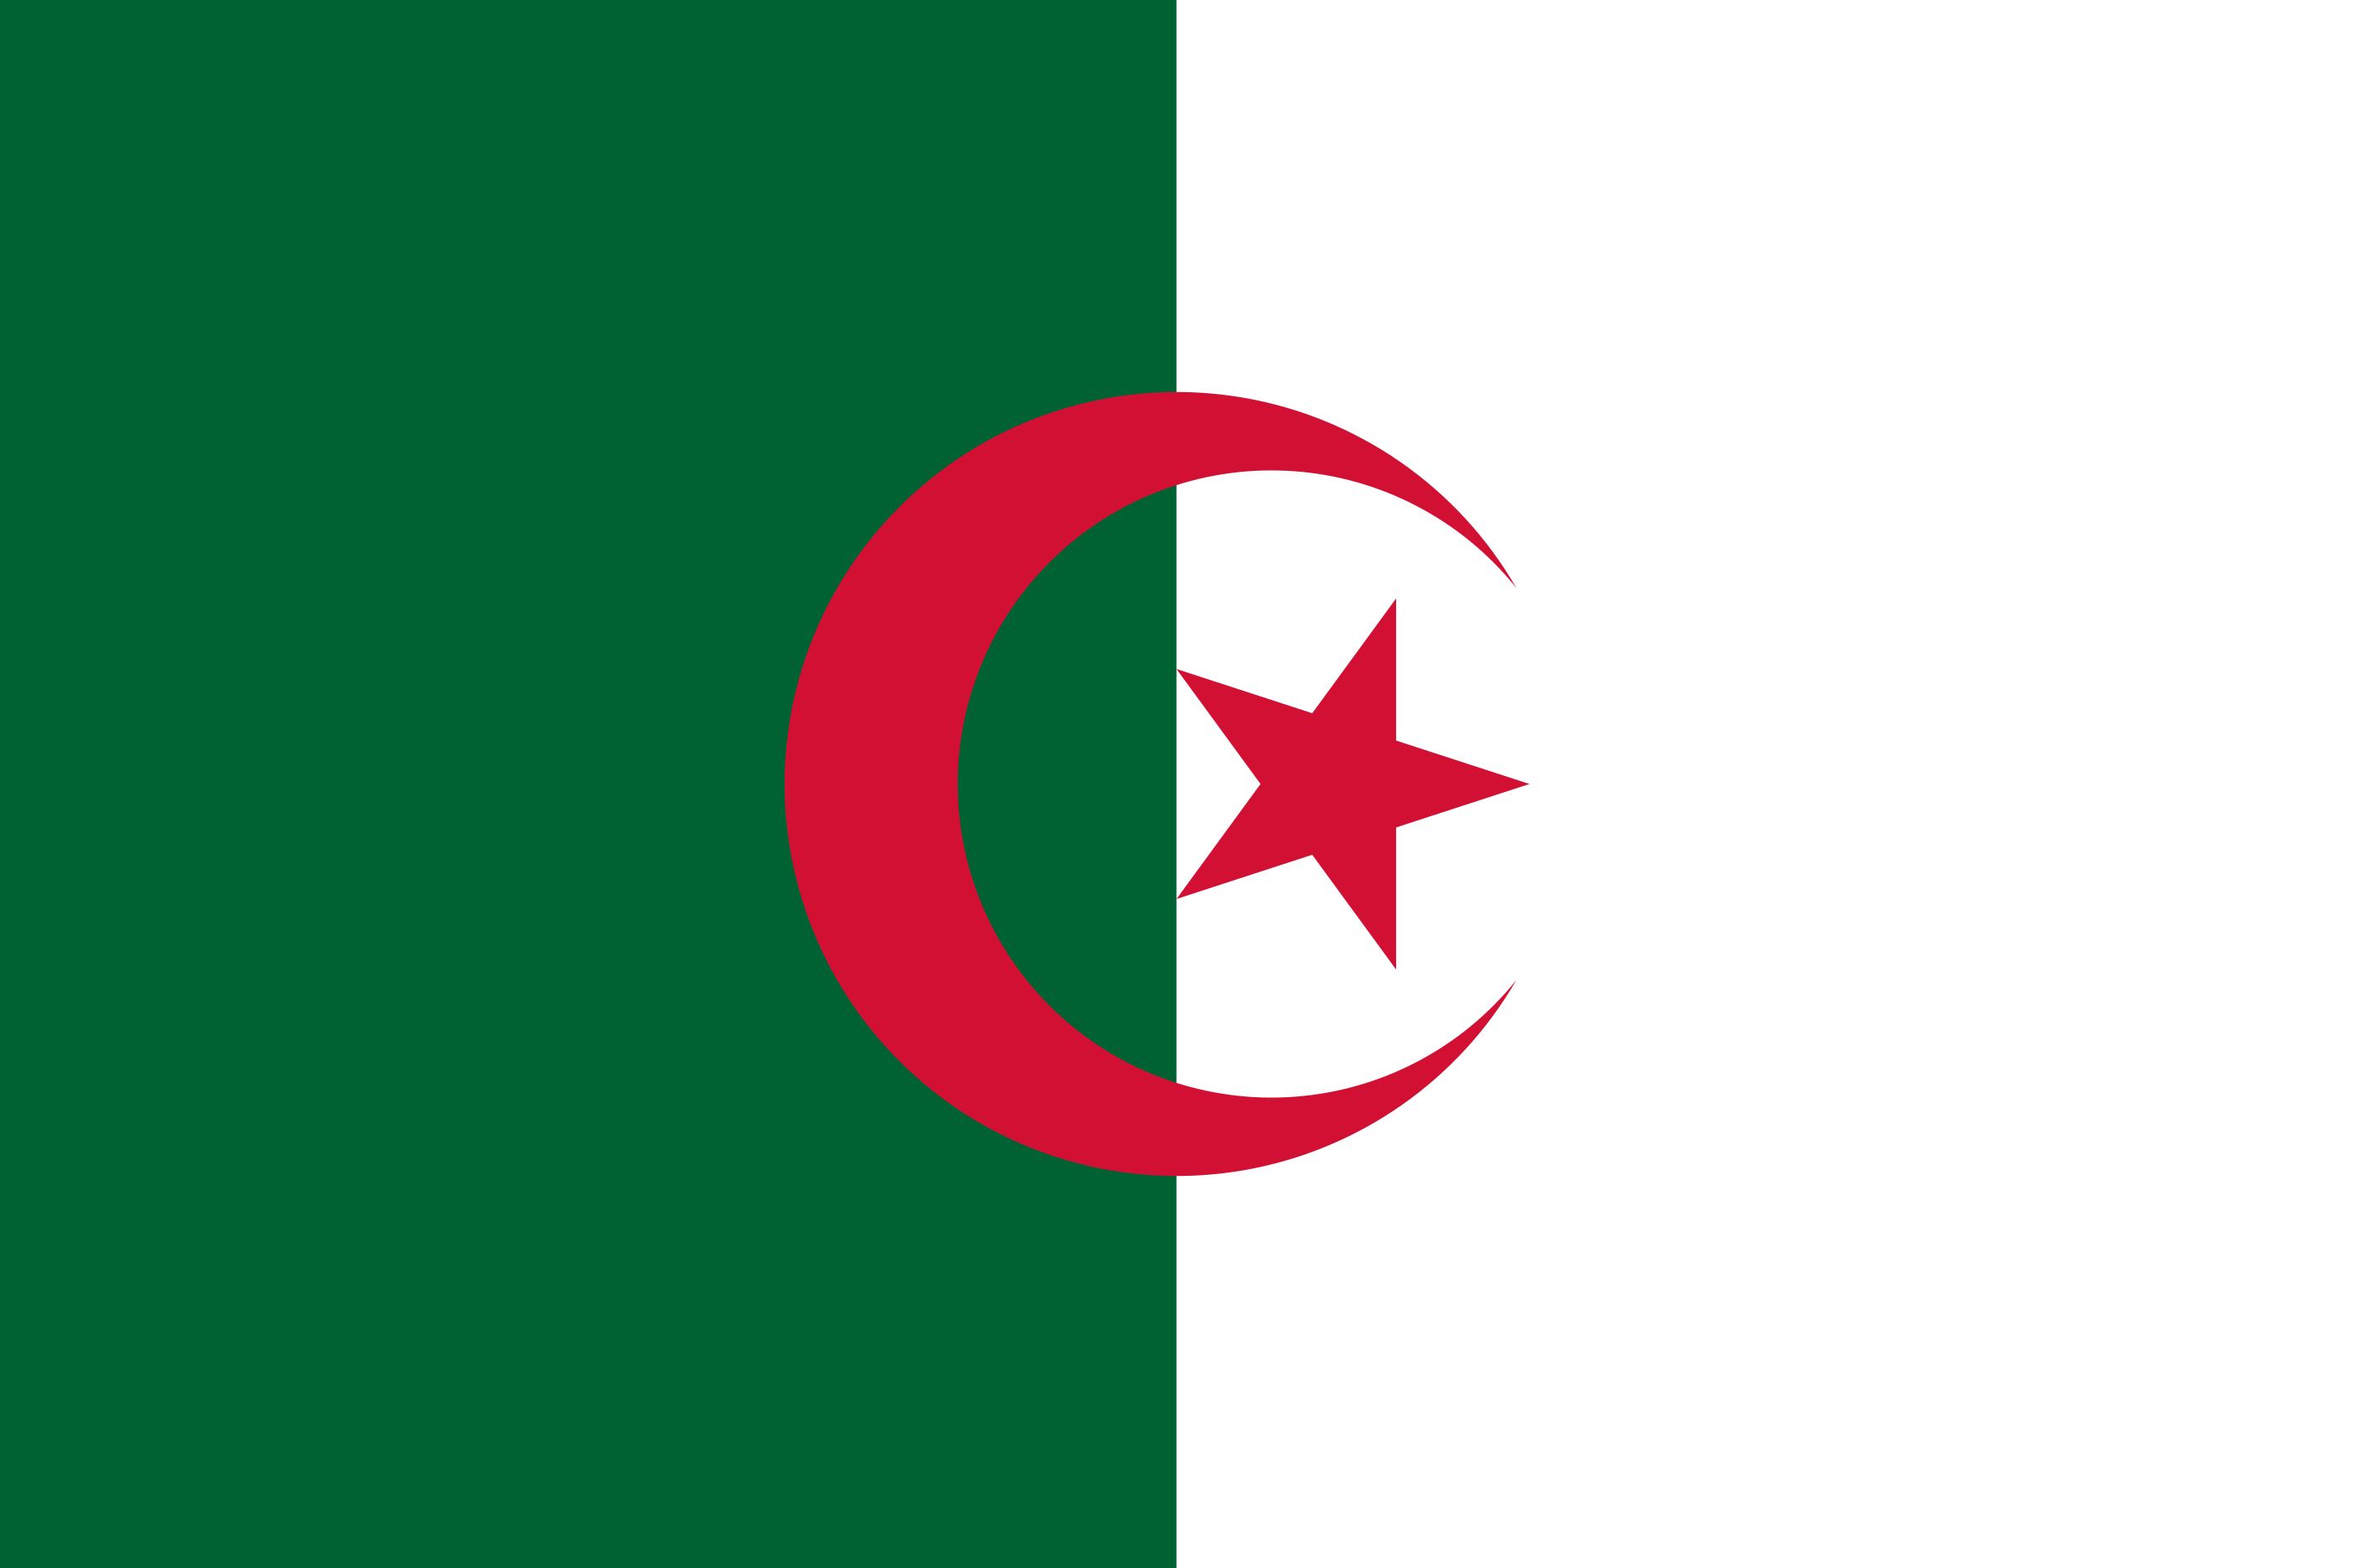 Algeria Flag Image - Free Download